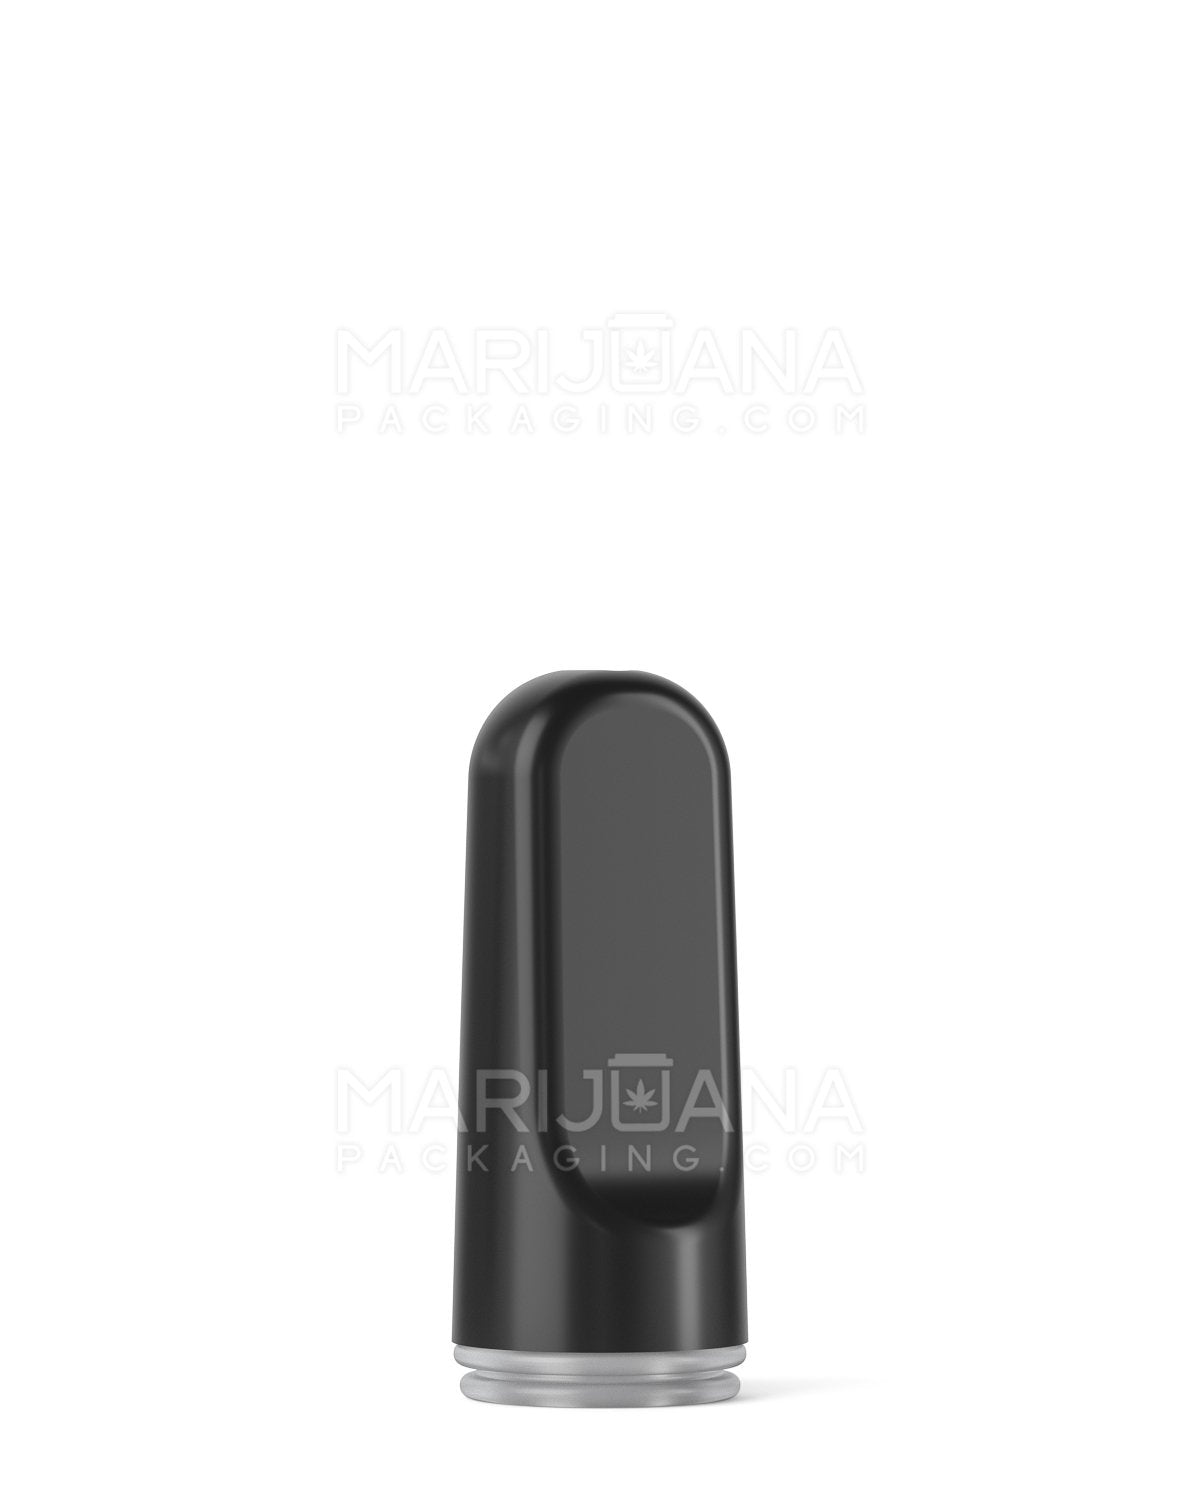 AVD Flat Vape Mouthpiece for GoodCarts Glass Cartridges | Black Ceramic - Screw On | Sample - 2